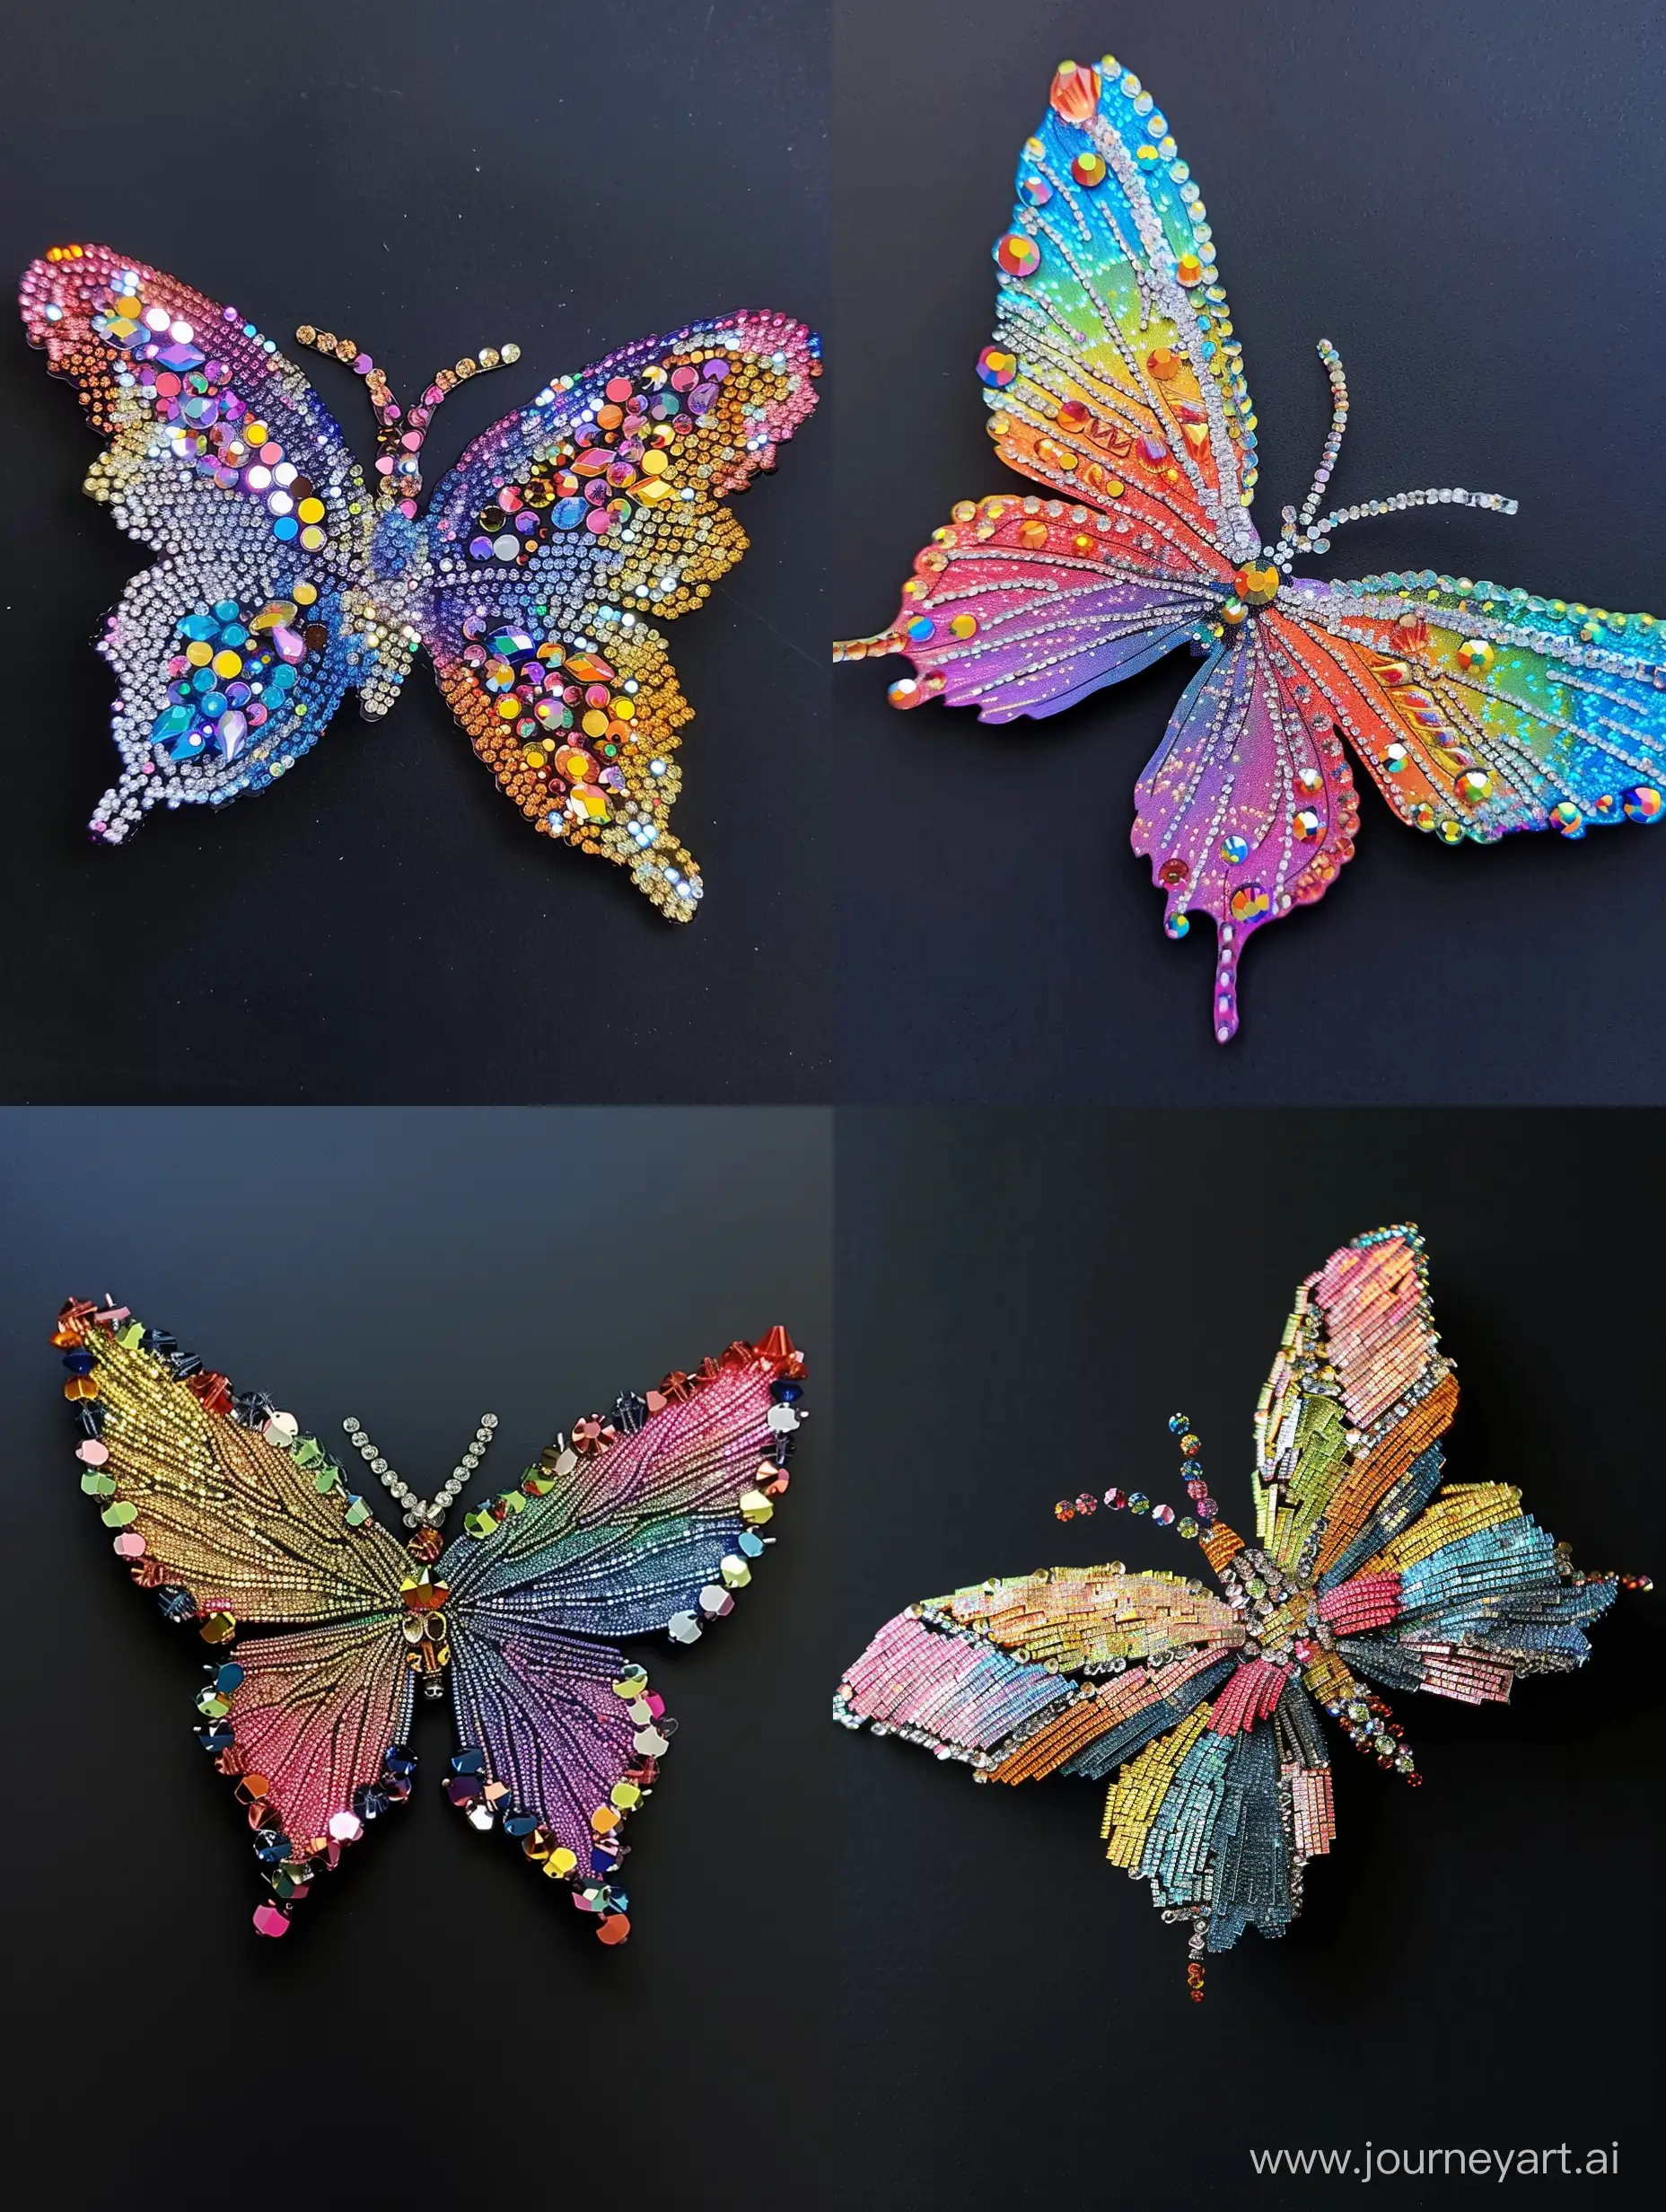 Vibrant-Crystal-Butterfly-Art-on-Black-Background